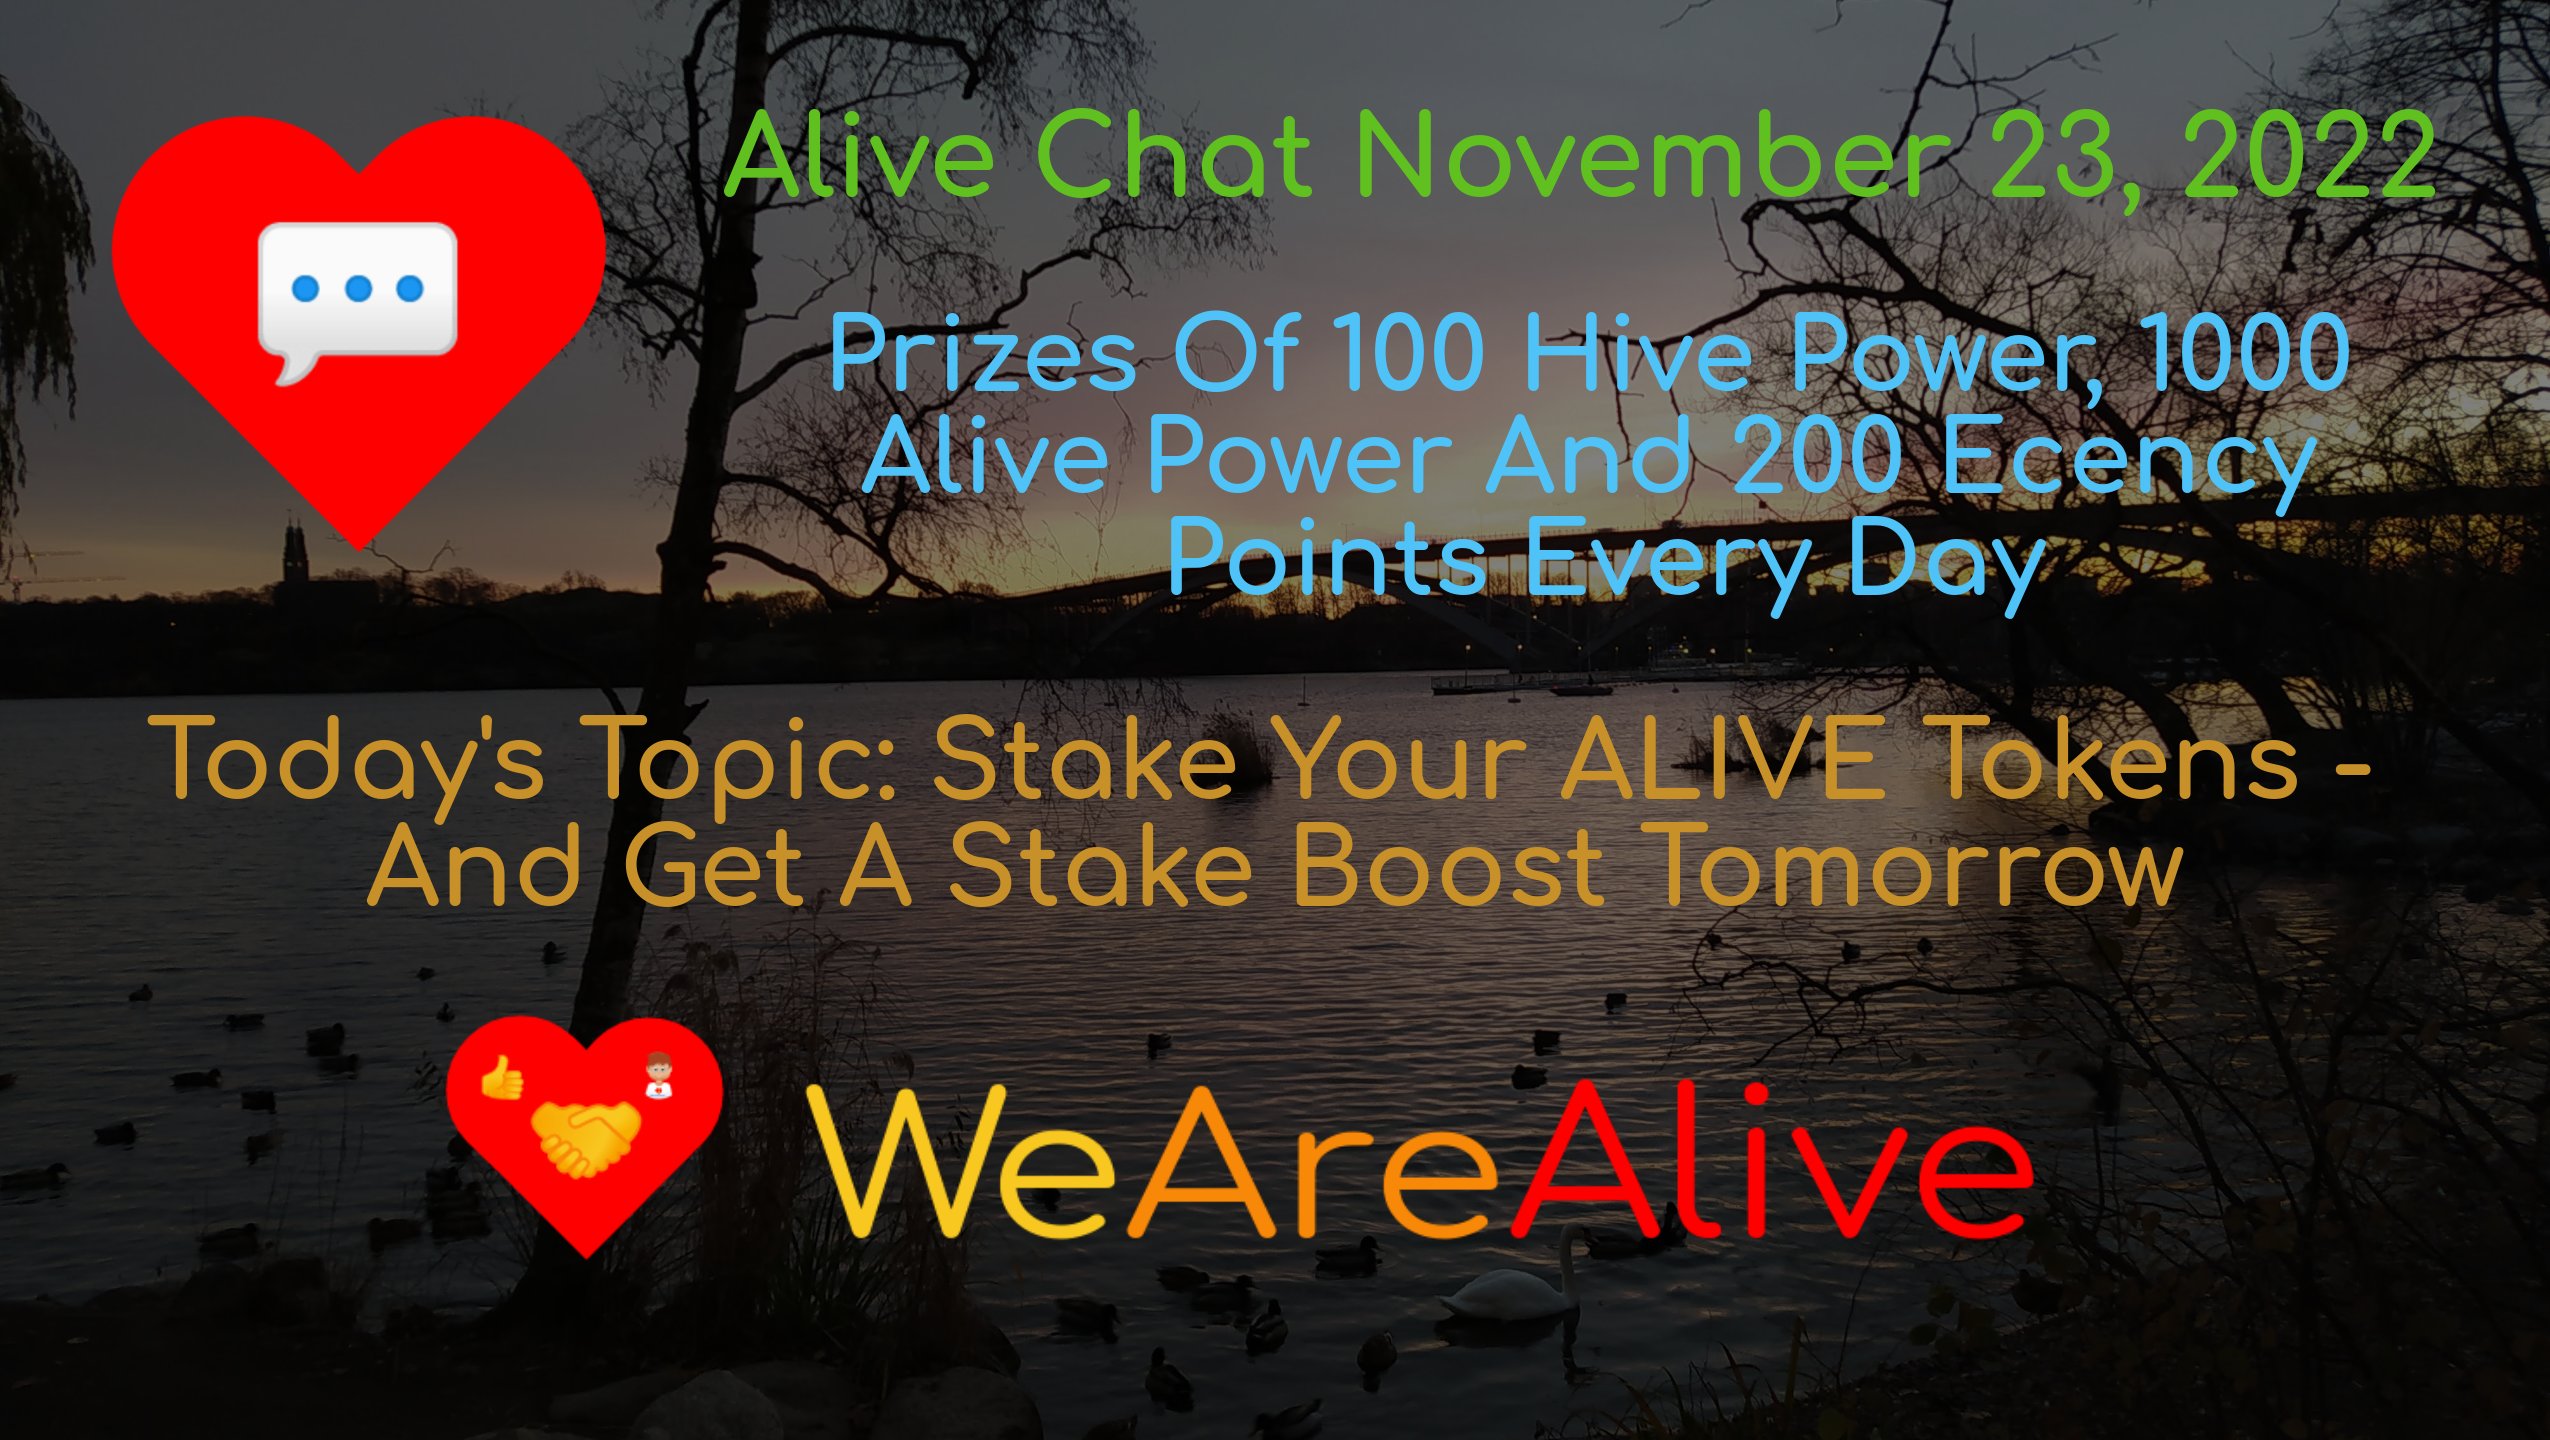 @alive.chat/alive-chat-november-23-2022